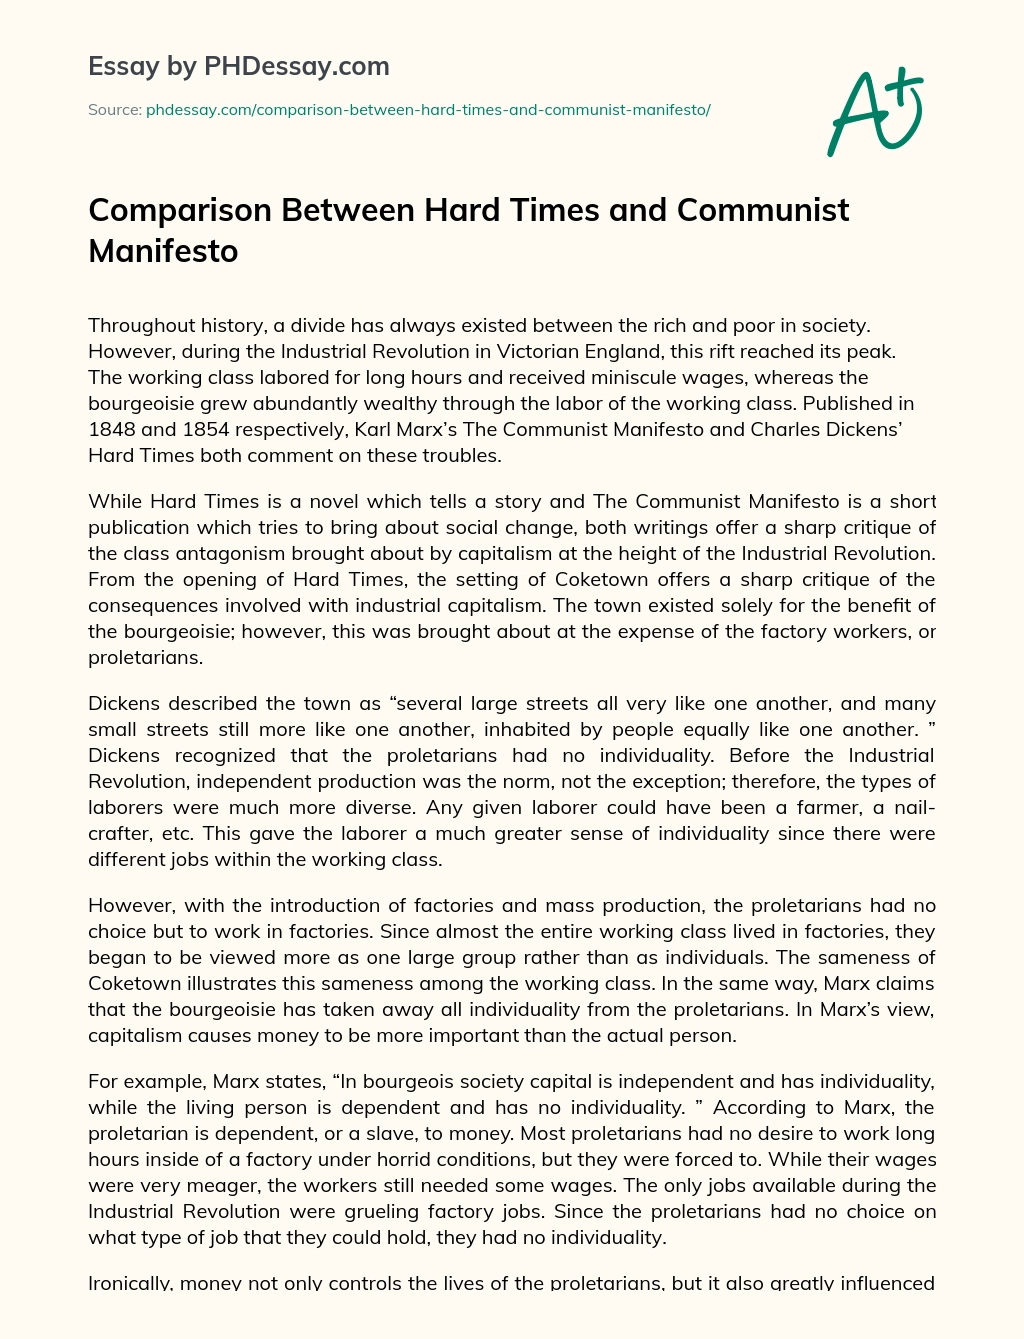 Comparison Between Hard Times and Communist Manifesto essay